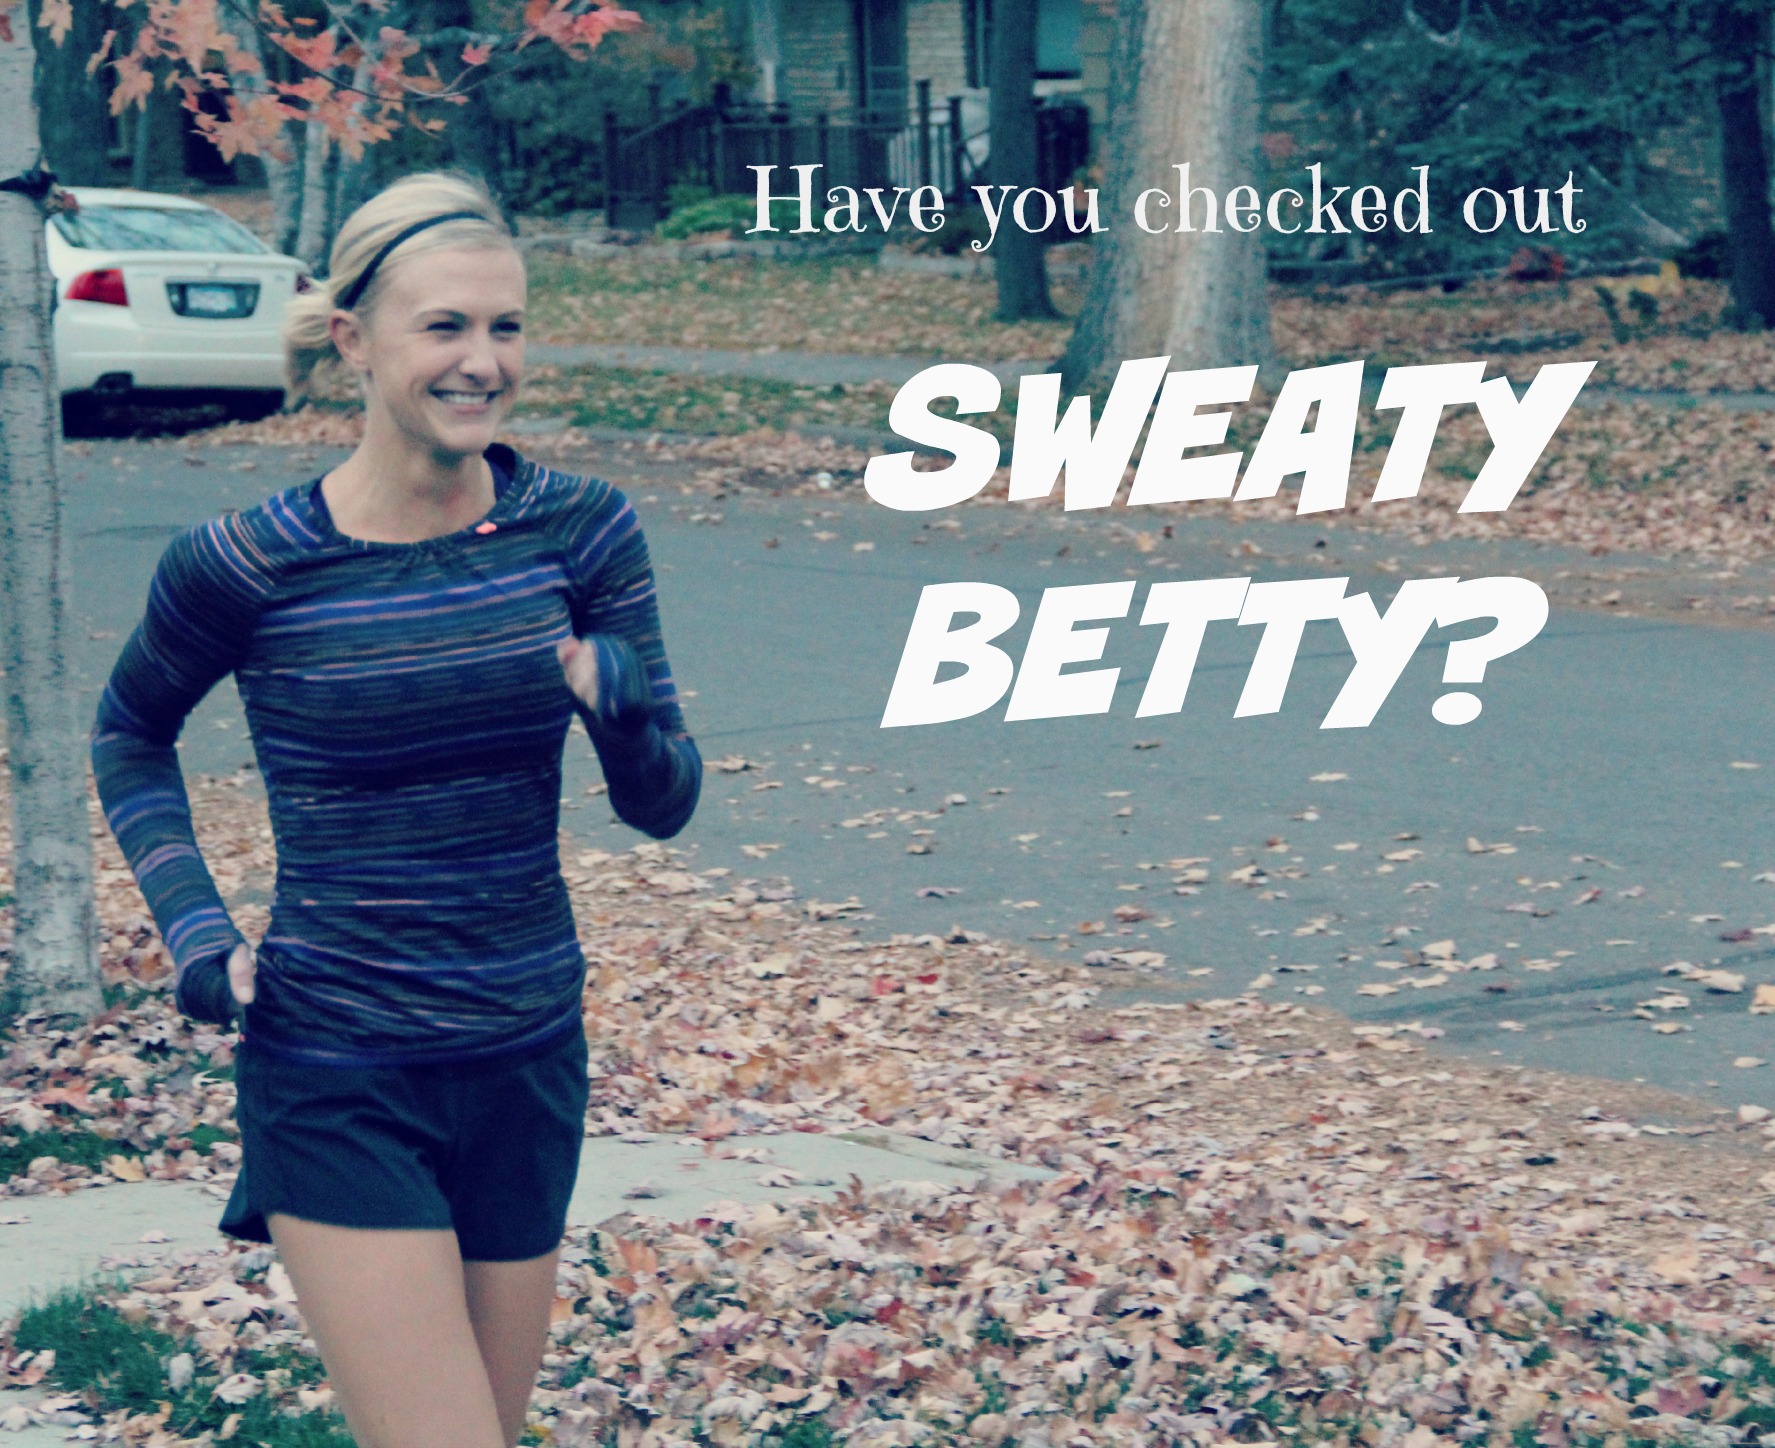 Sweaty Betty on X: Every fitness fan needs to try the Zero